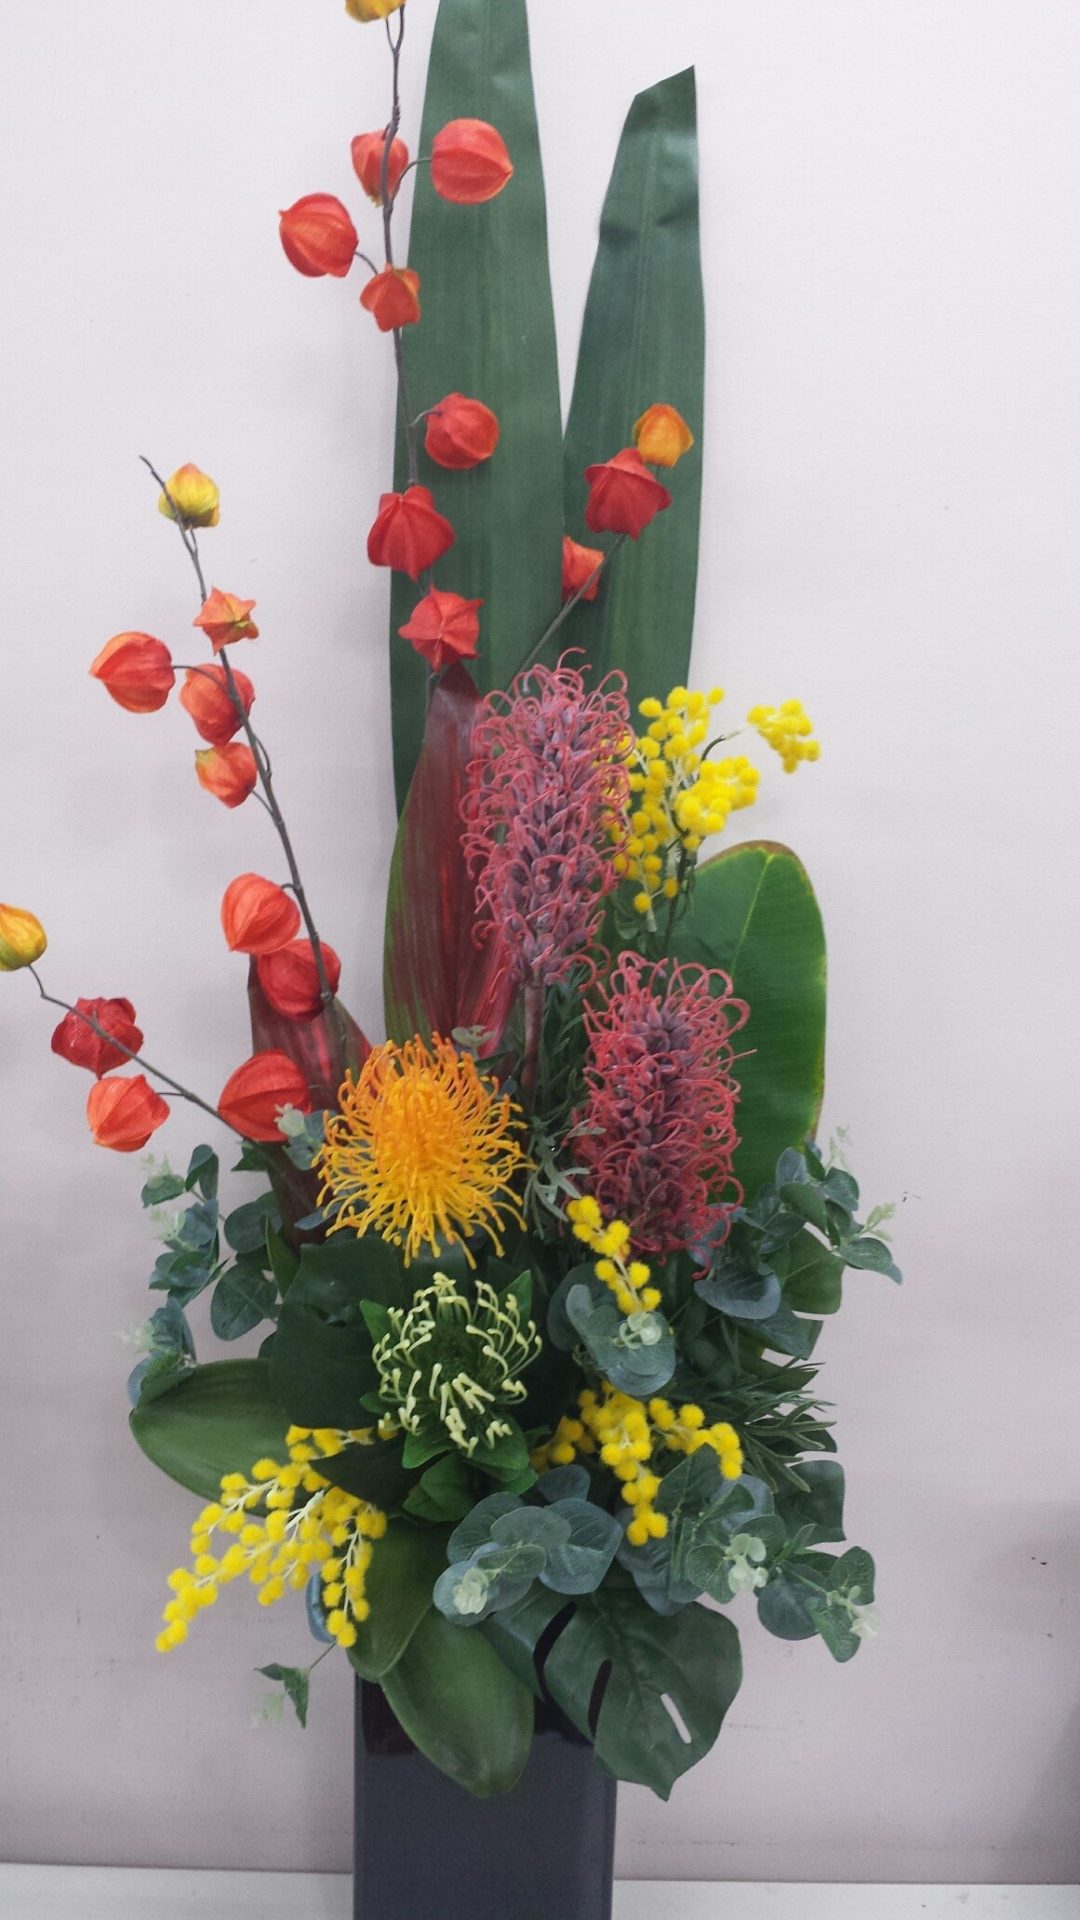 Grevillea, natives and wild flower arrangement